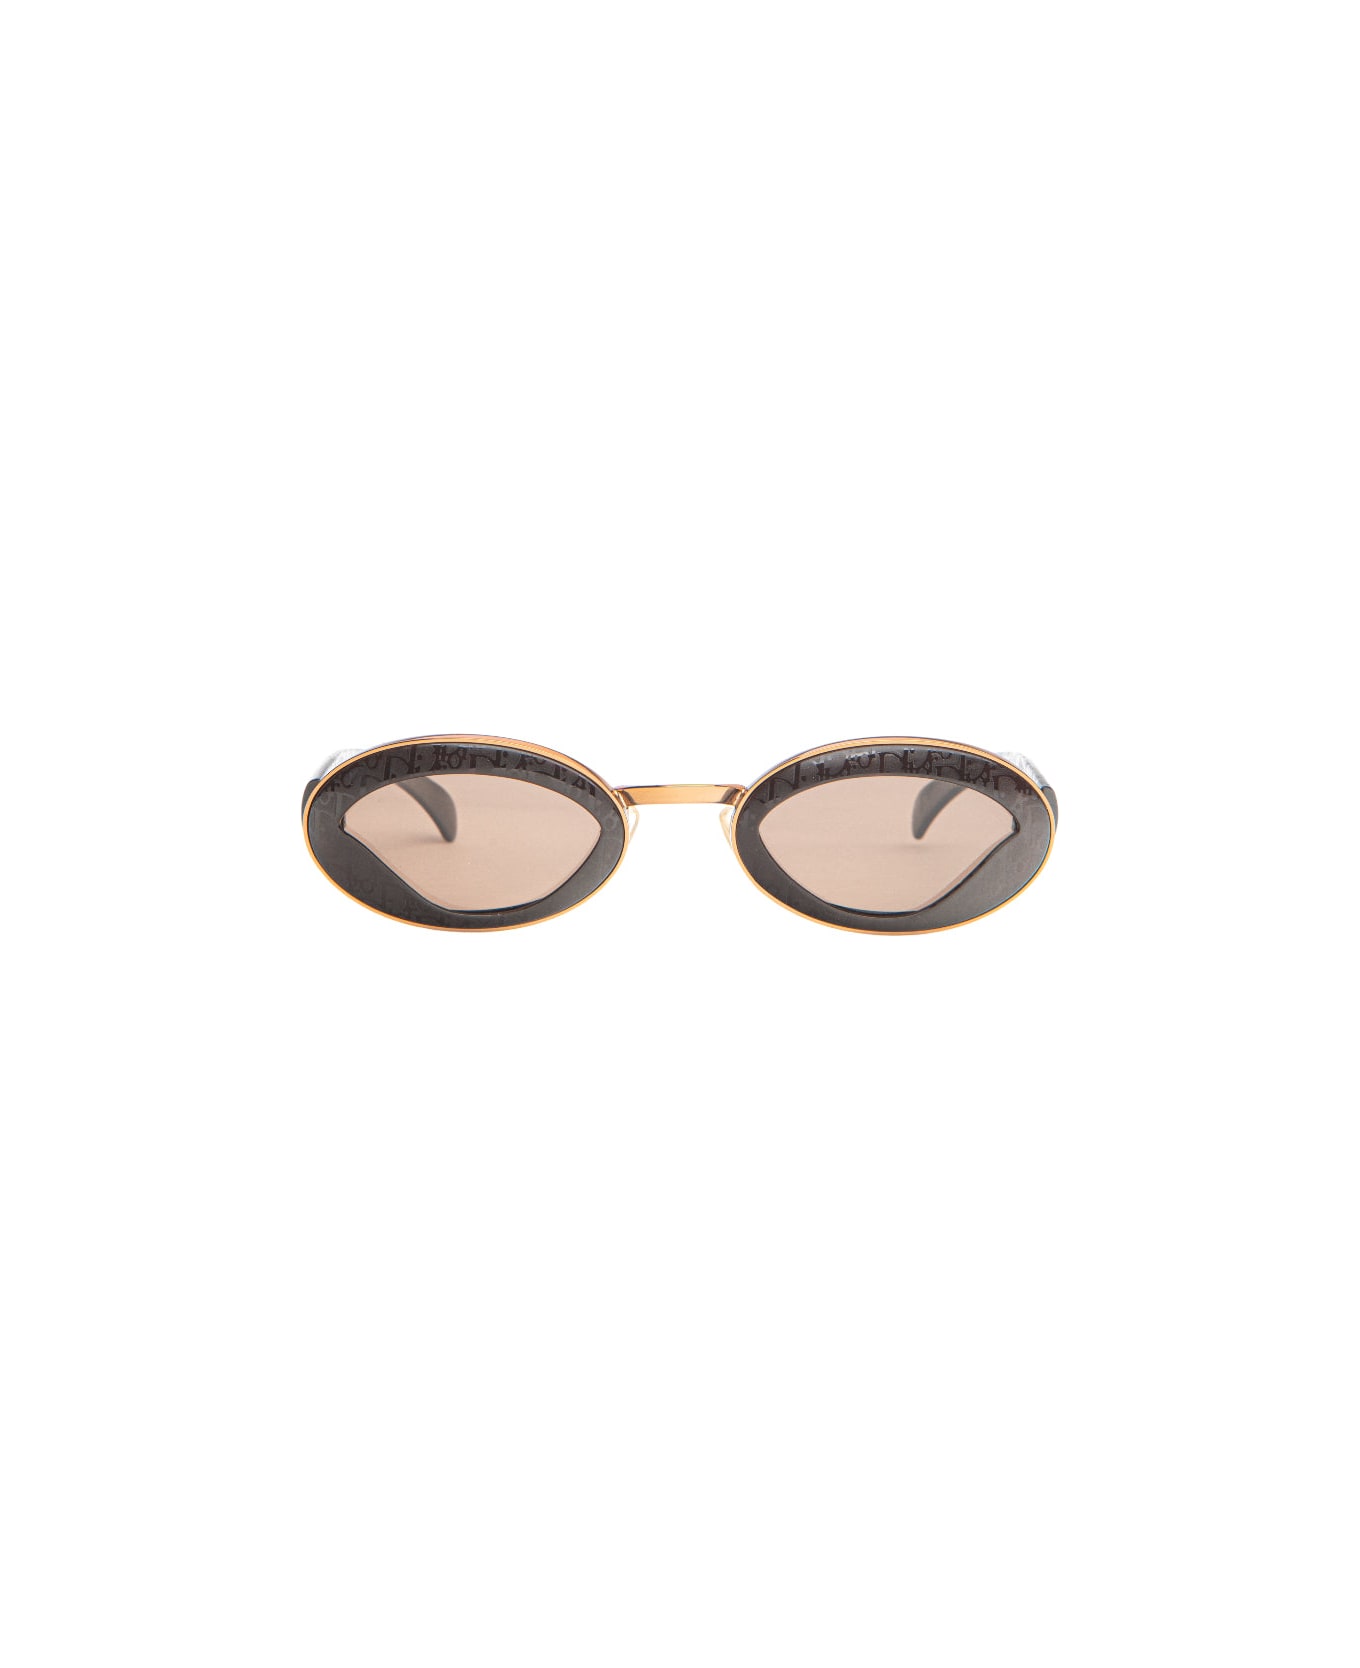 Dior Eyewear Pin Up - Limited Edition - Dark Brown Titanium Sunglasses